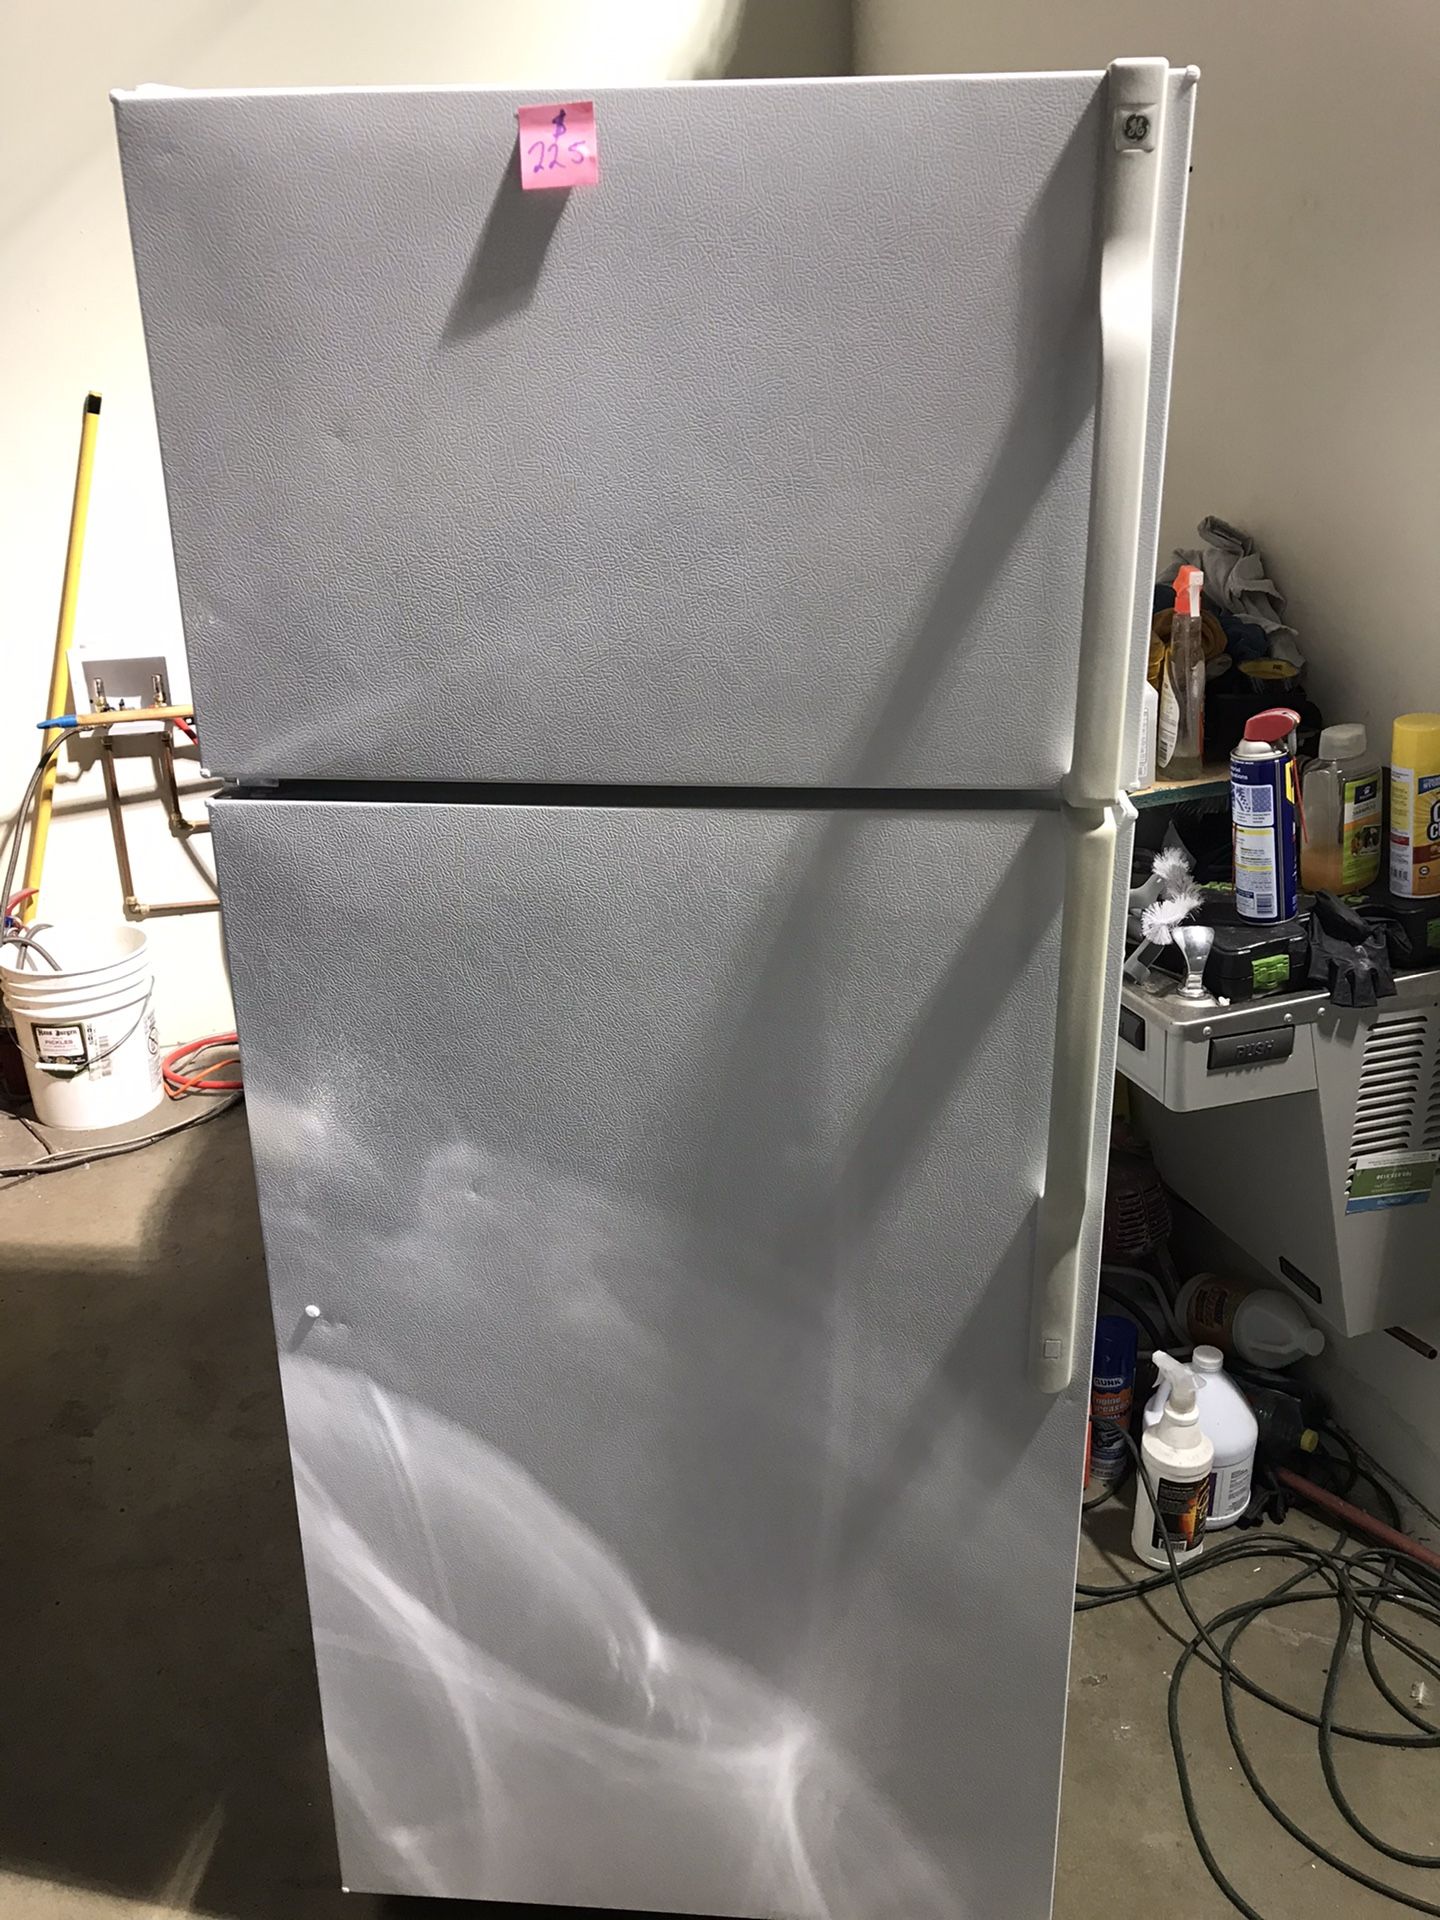 Refrigerator GE